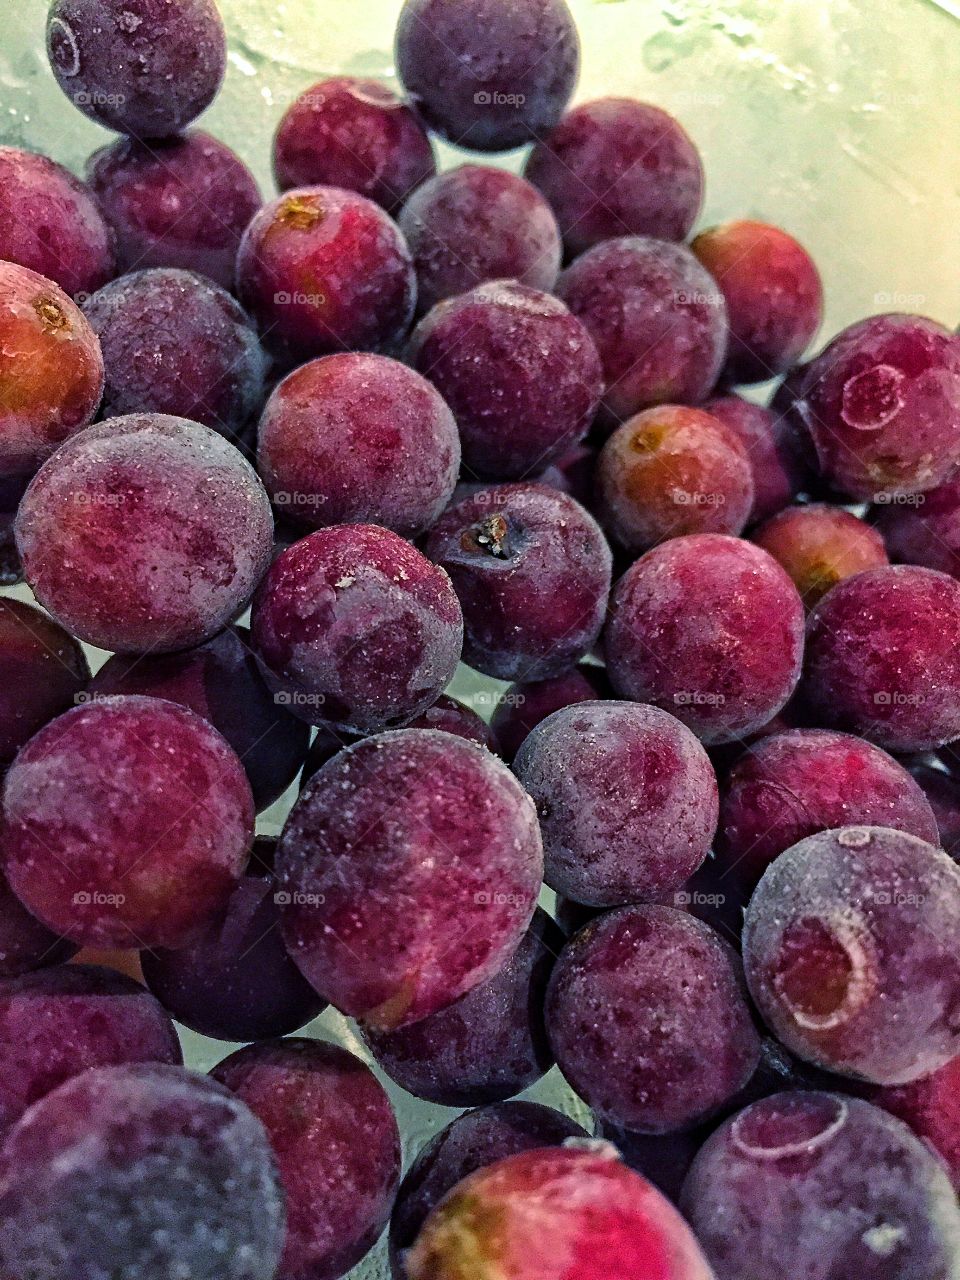 Frozen Okanagan grapes. Refreshing!